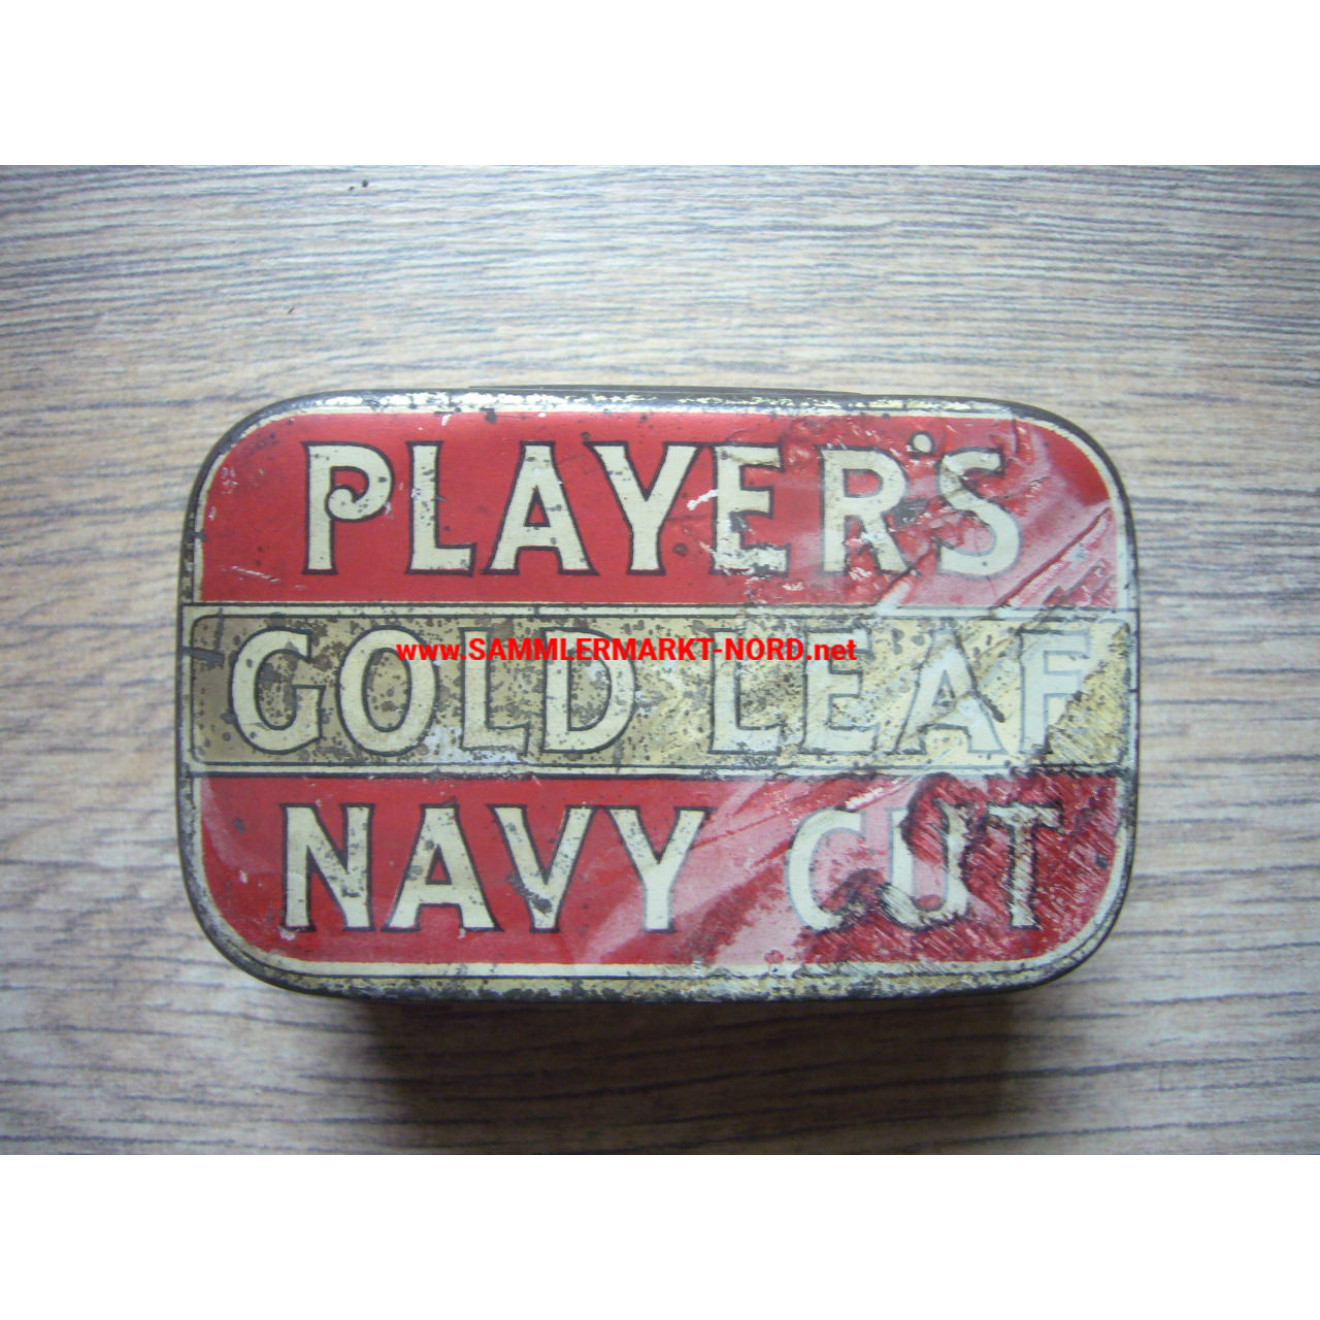 Player´s Gold Leaf Navy Cut - Tabakdose - Marketender